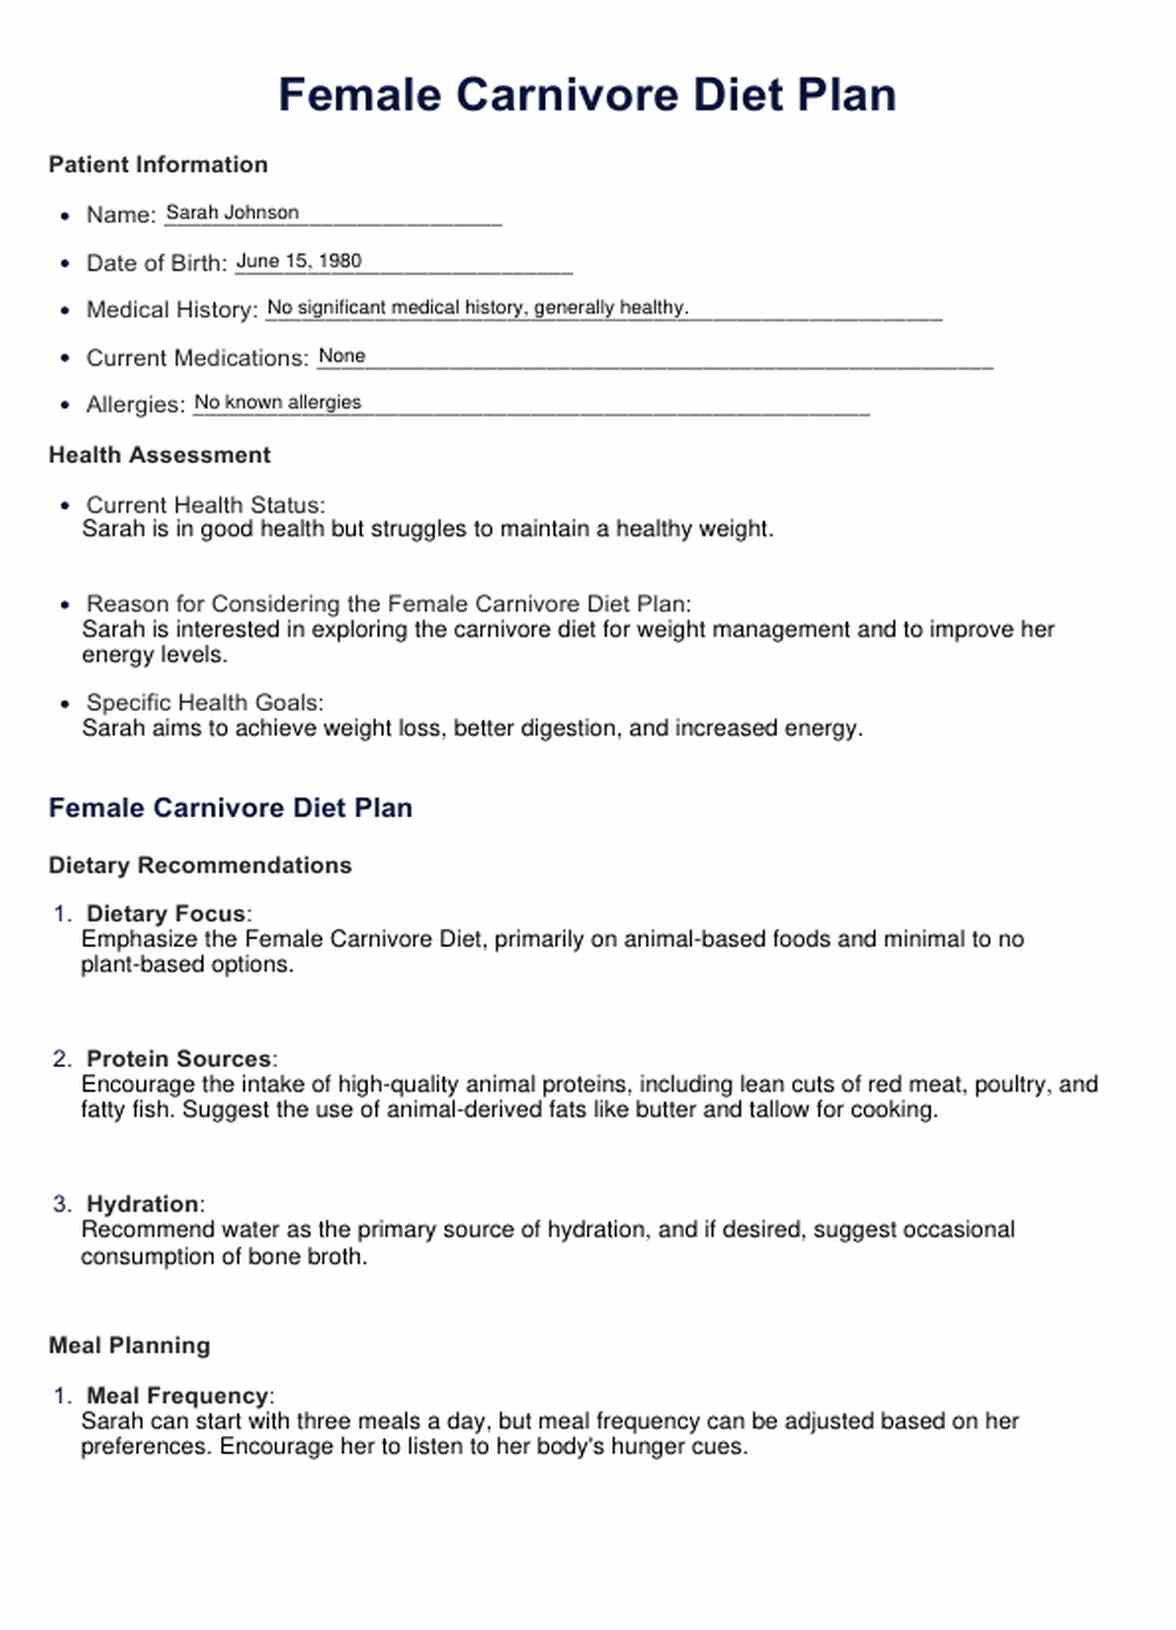 Female Carnivore Diet Plan PDF Example